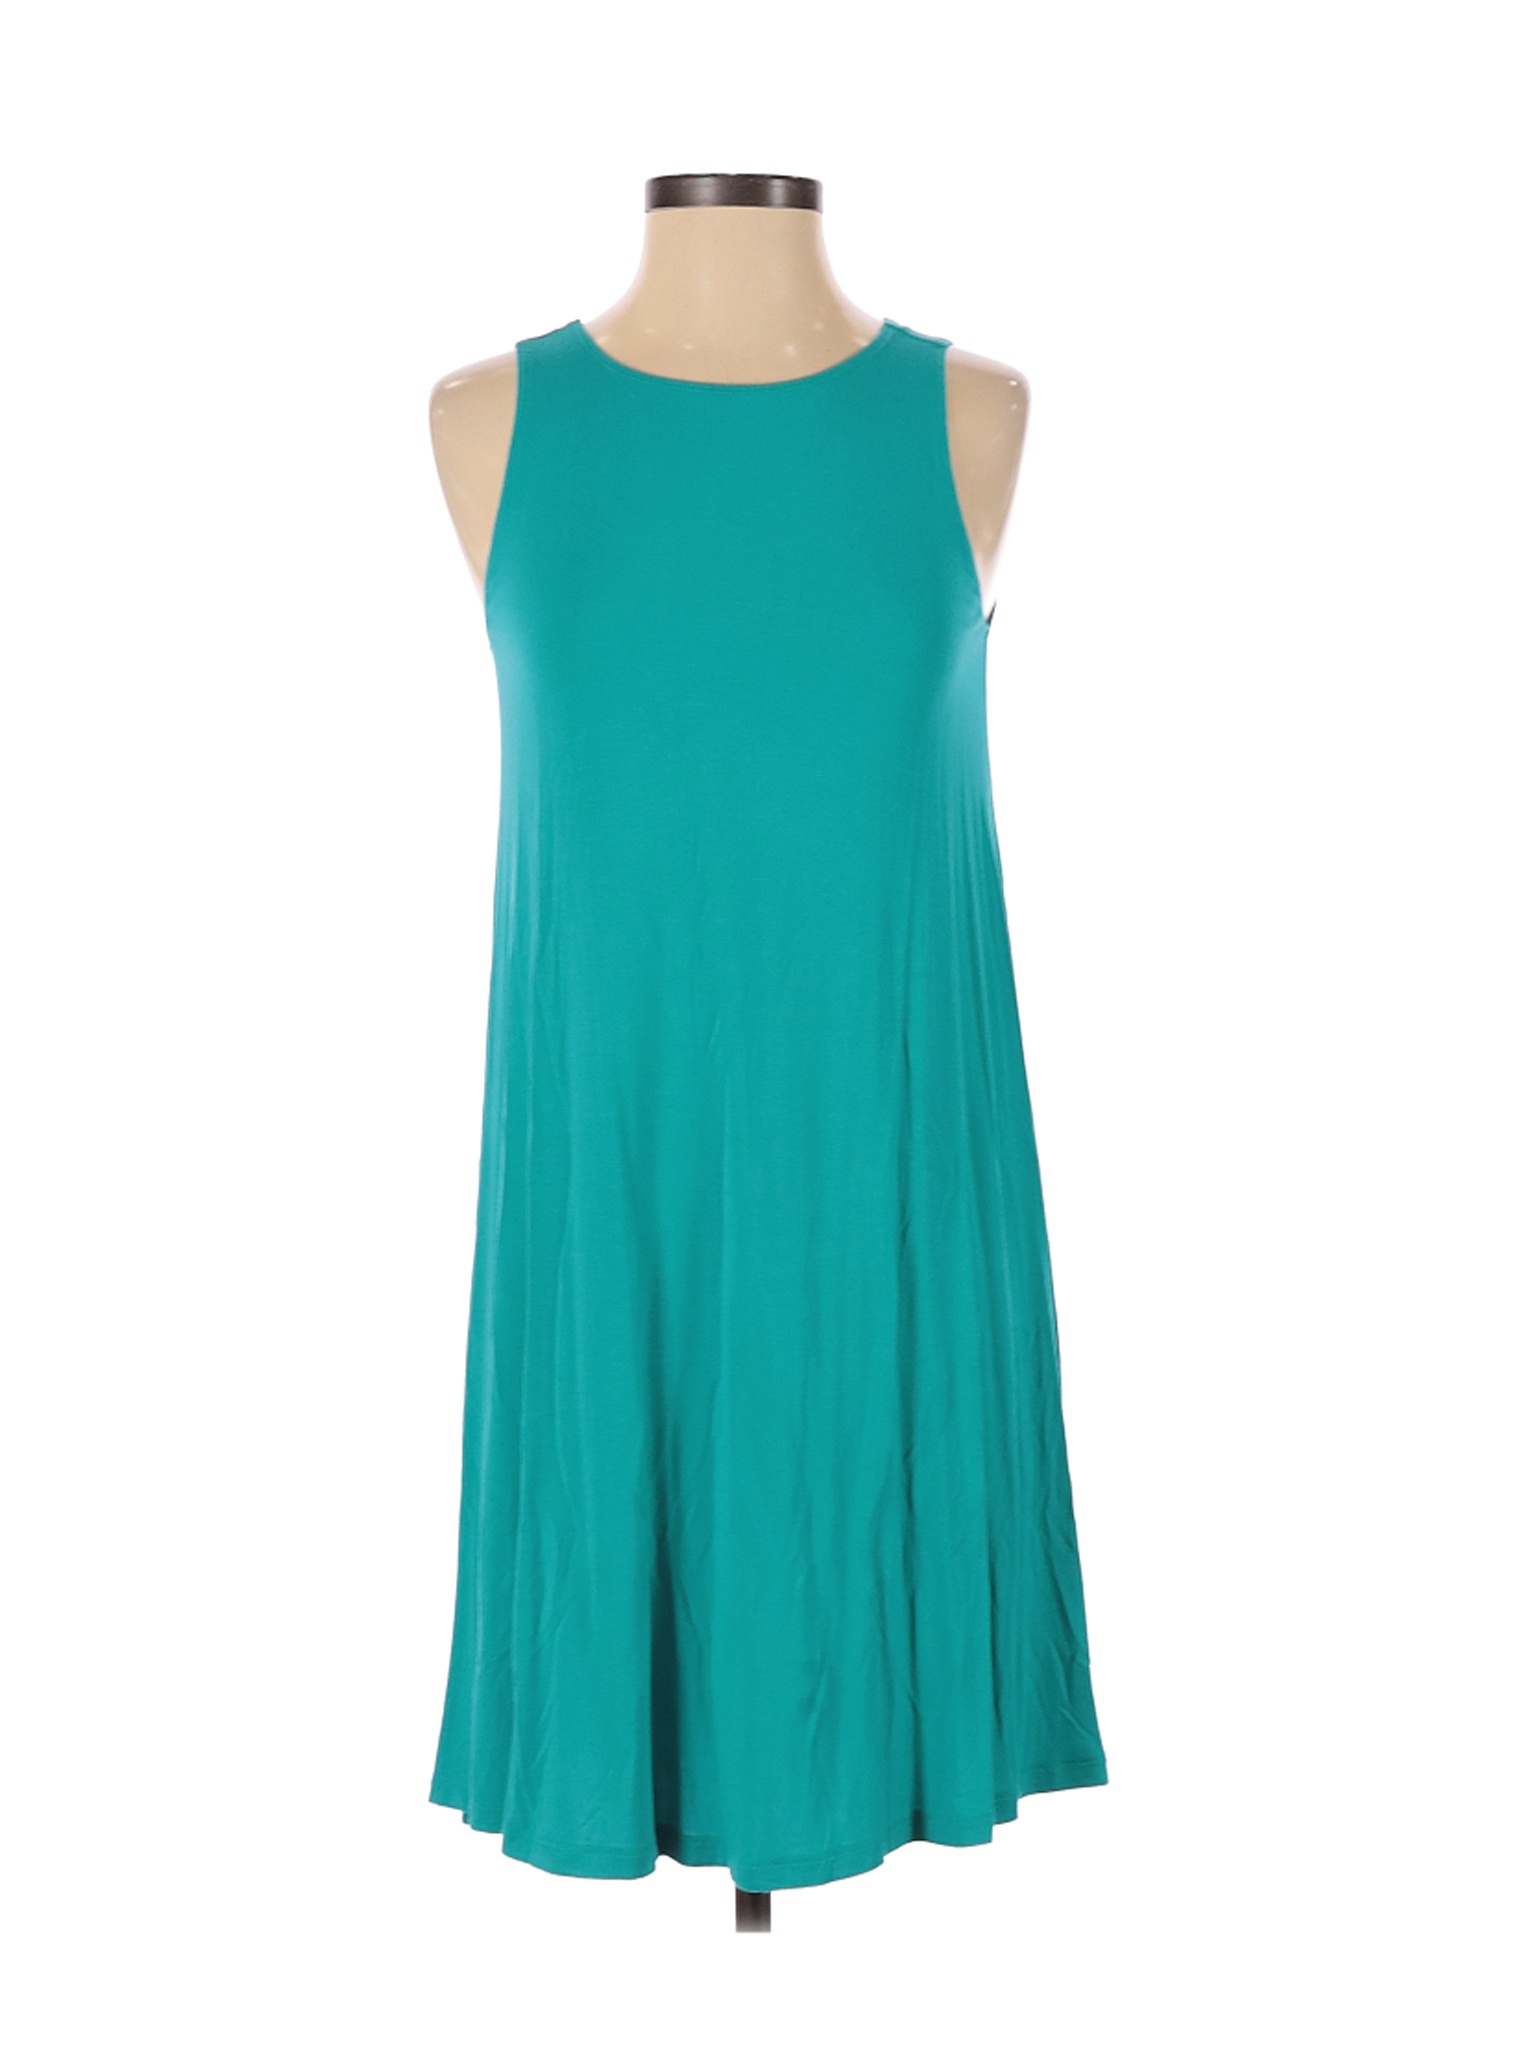 Old Navy Women Green Casual Dress S | eBay